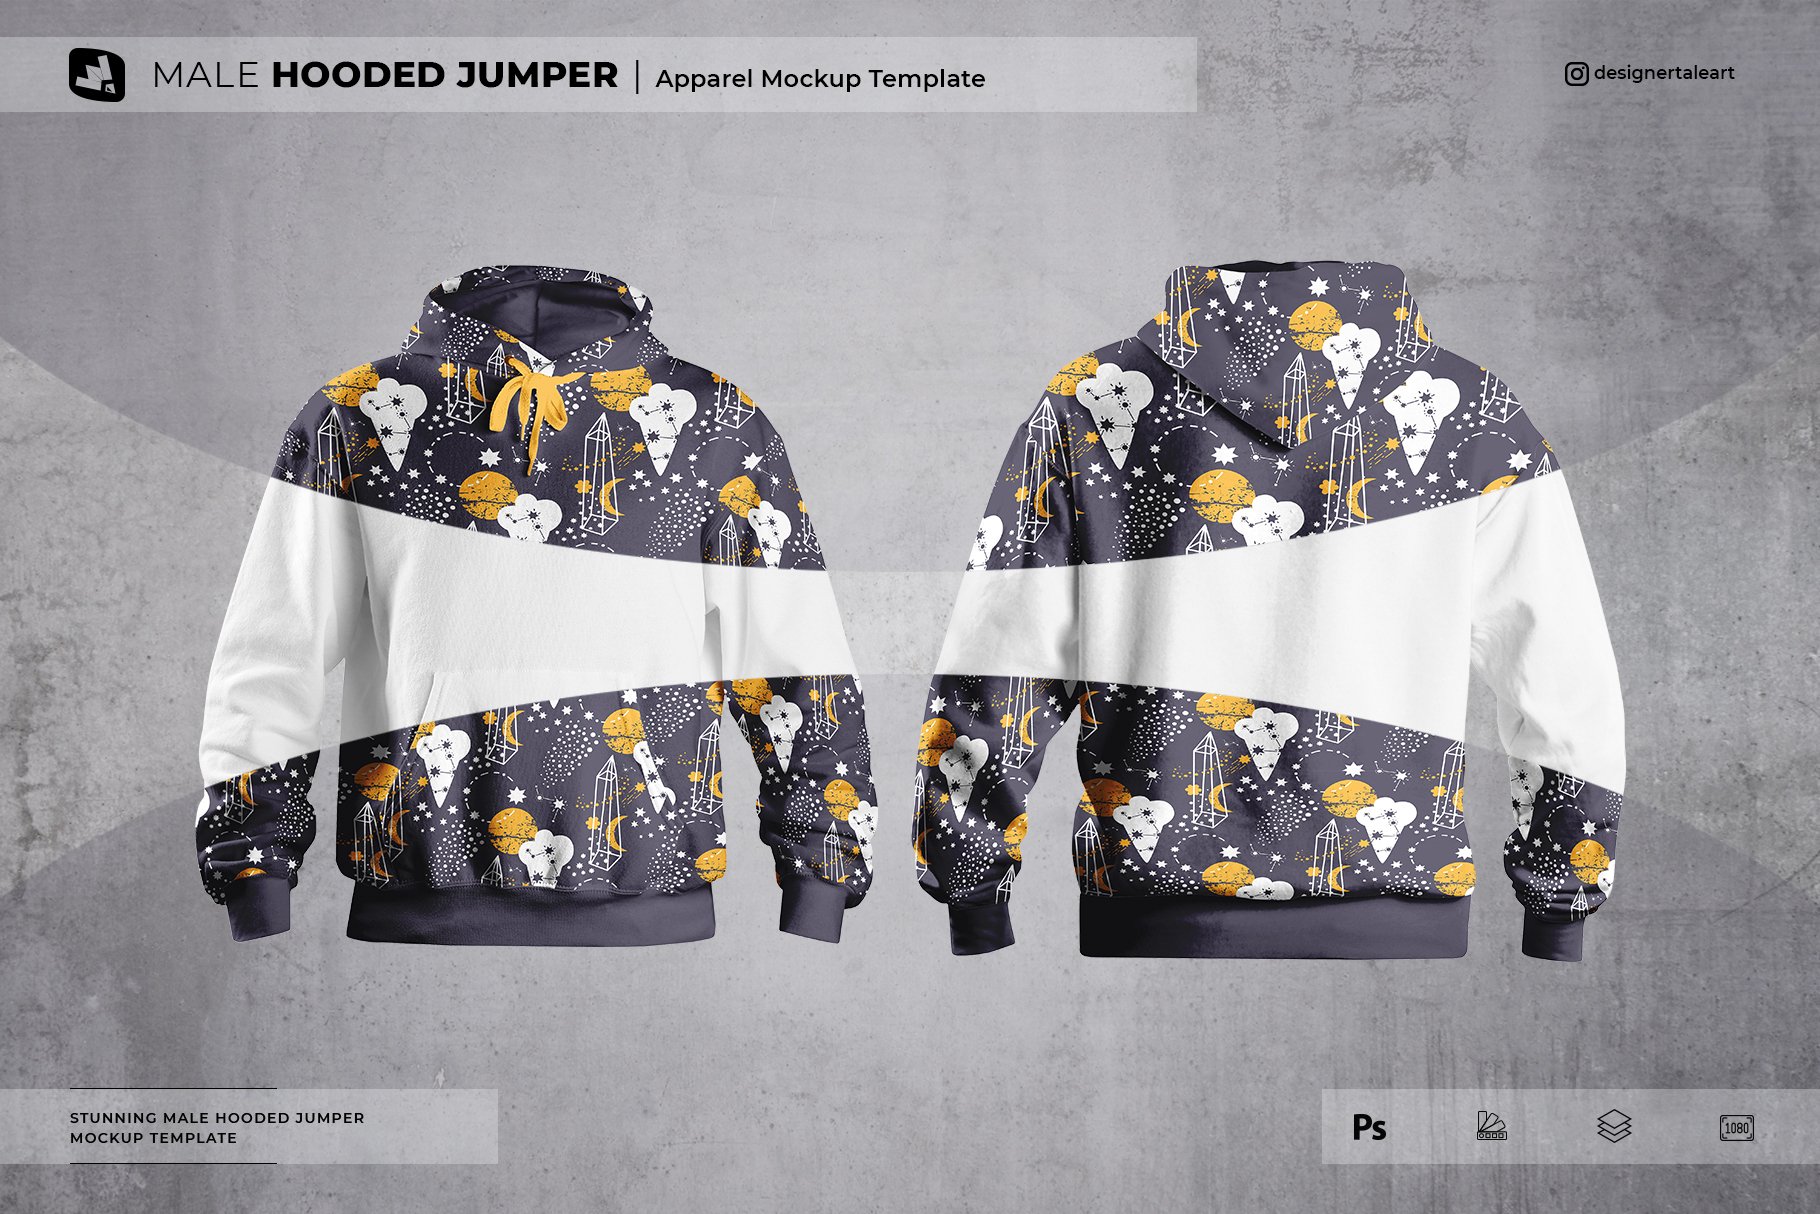 Male Hooded Jumper Mockup cover image.